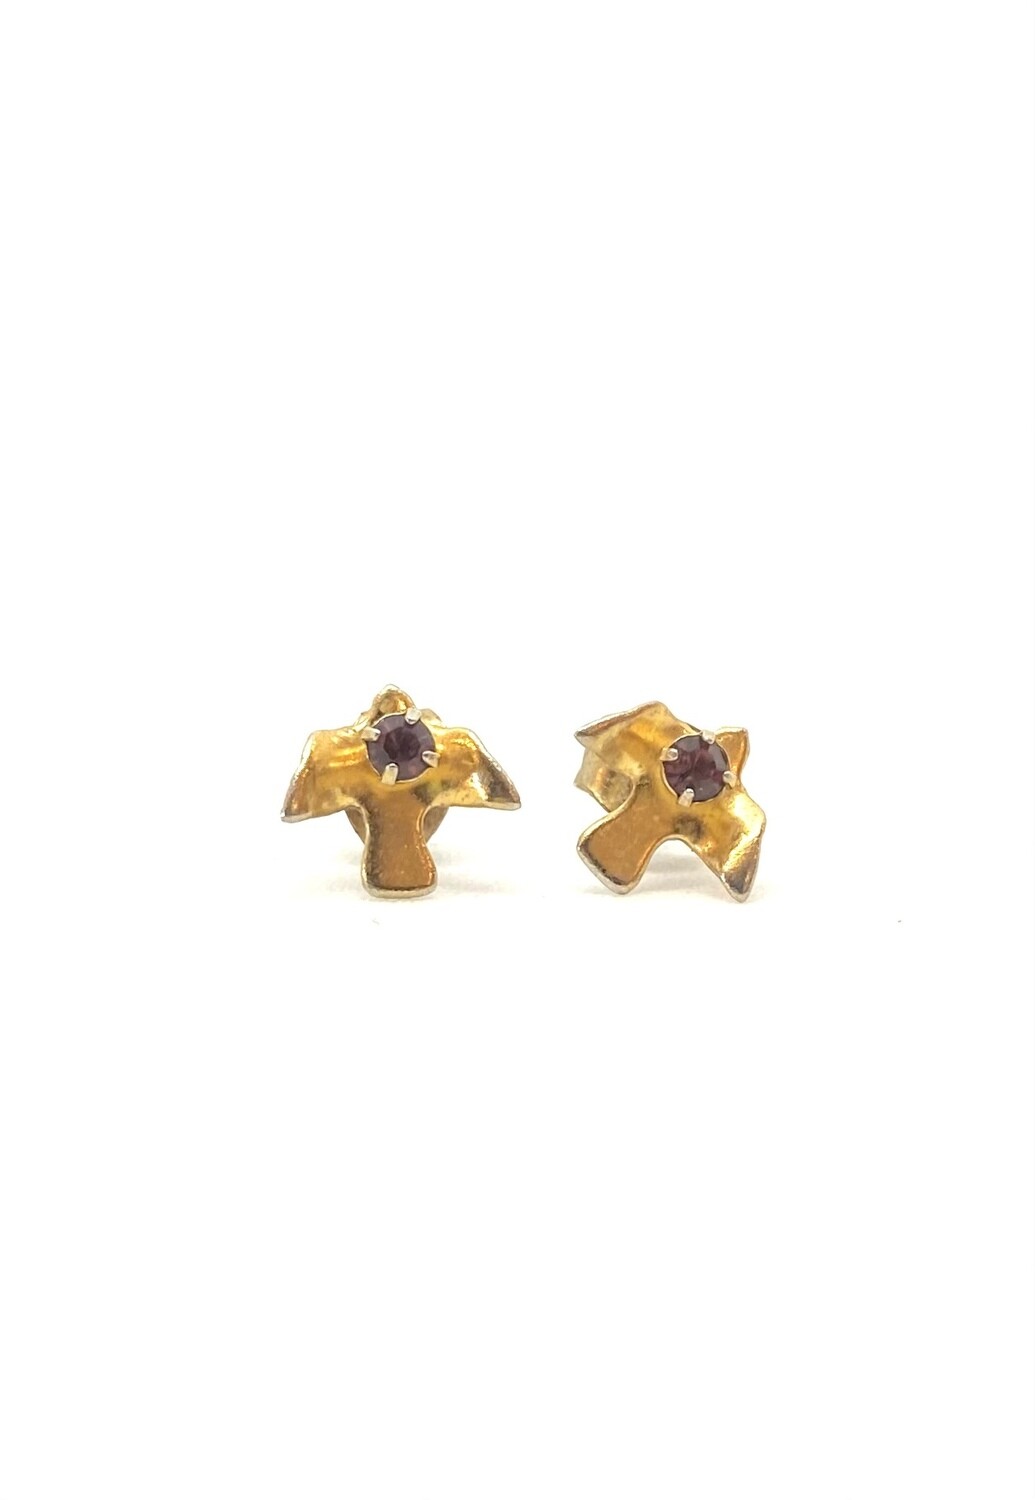 Gold Tone Bird with a Purple Jewel Earrings